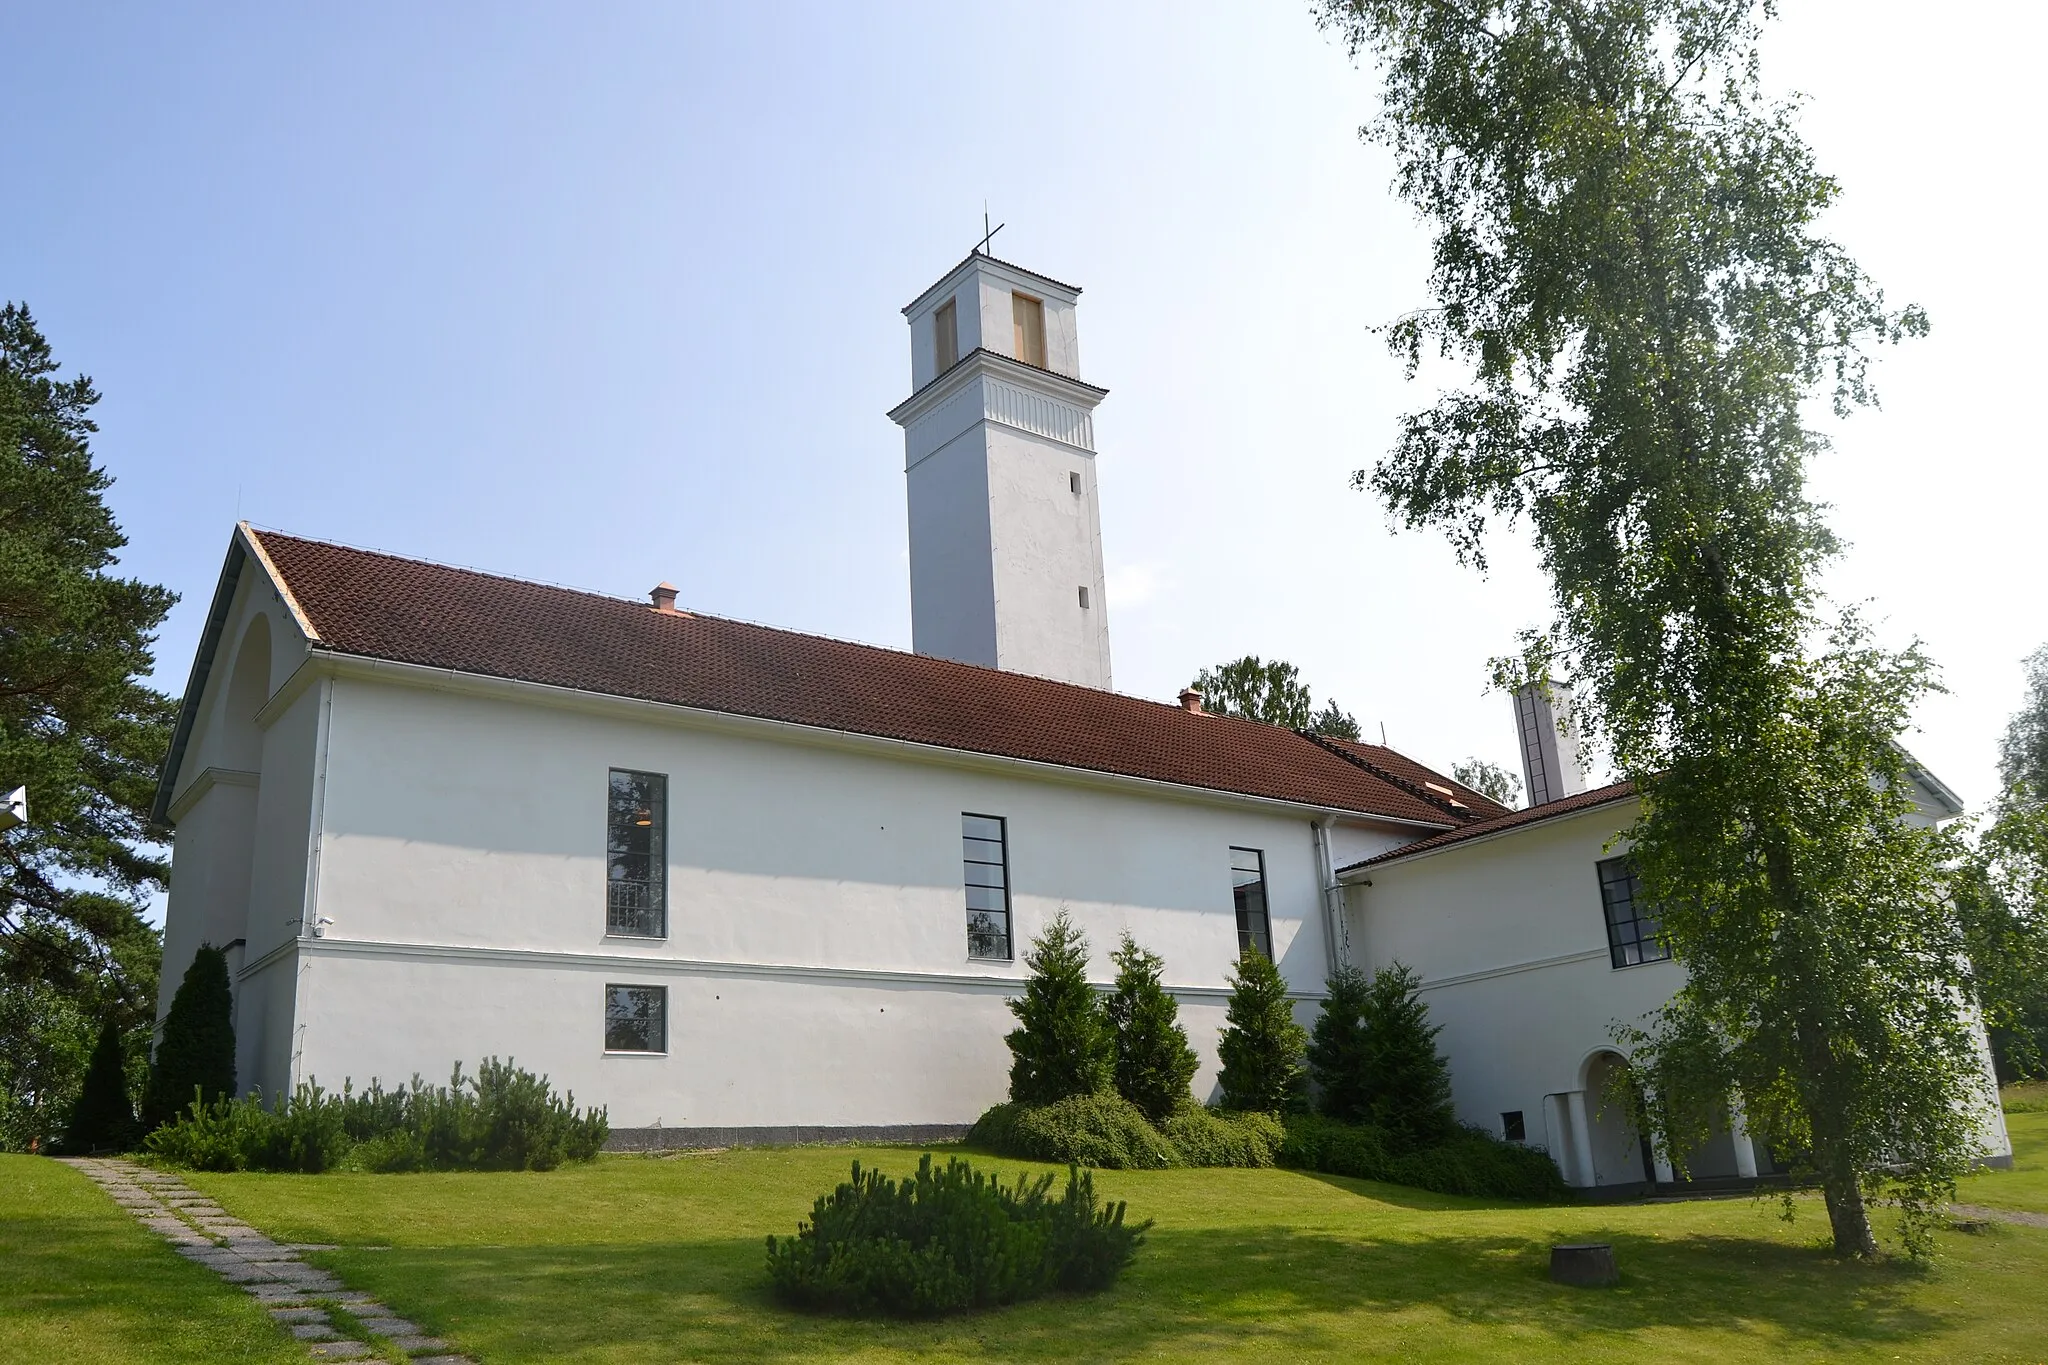 Photo showing: Muurame Church in Finland